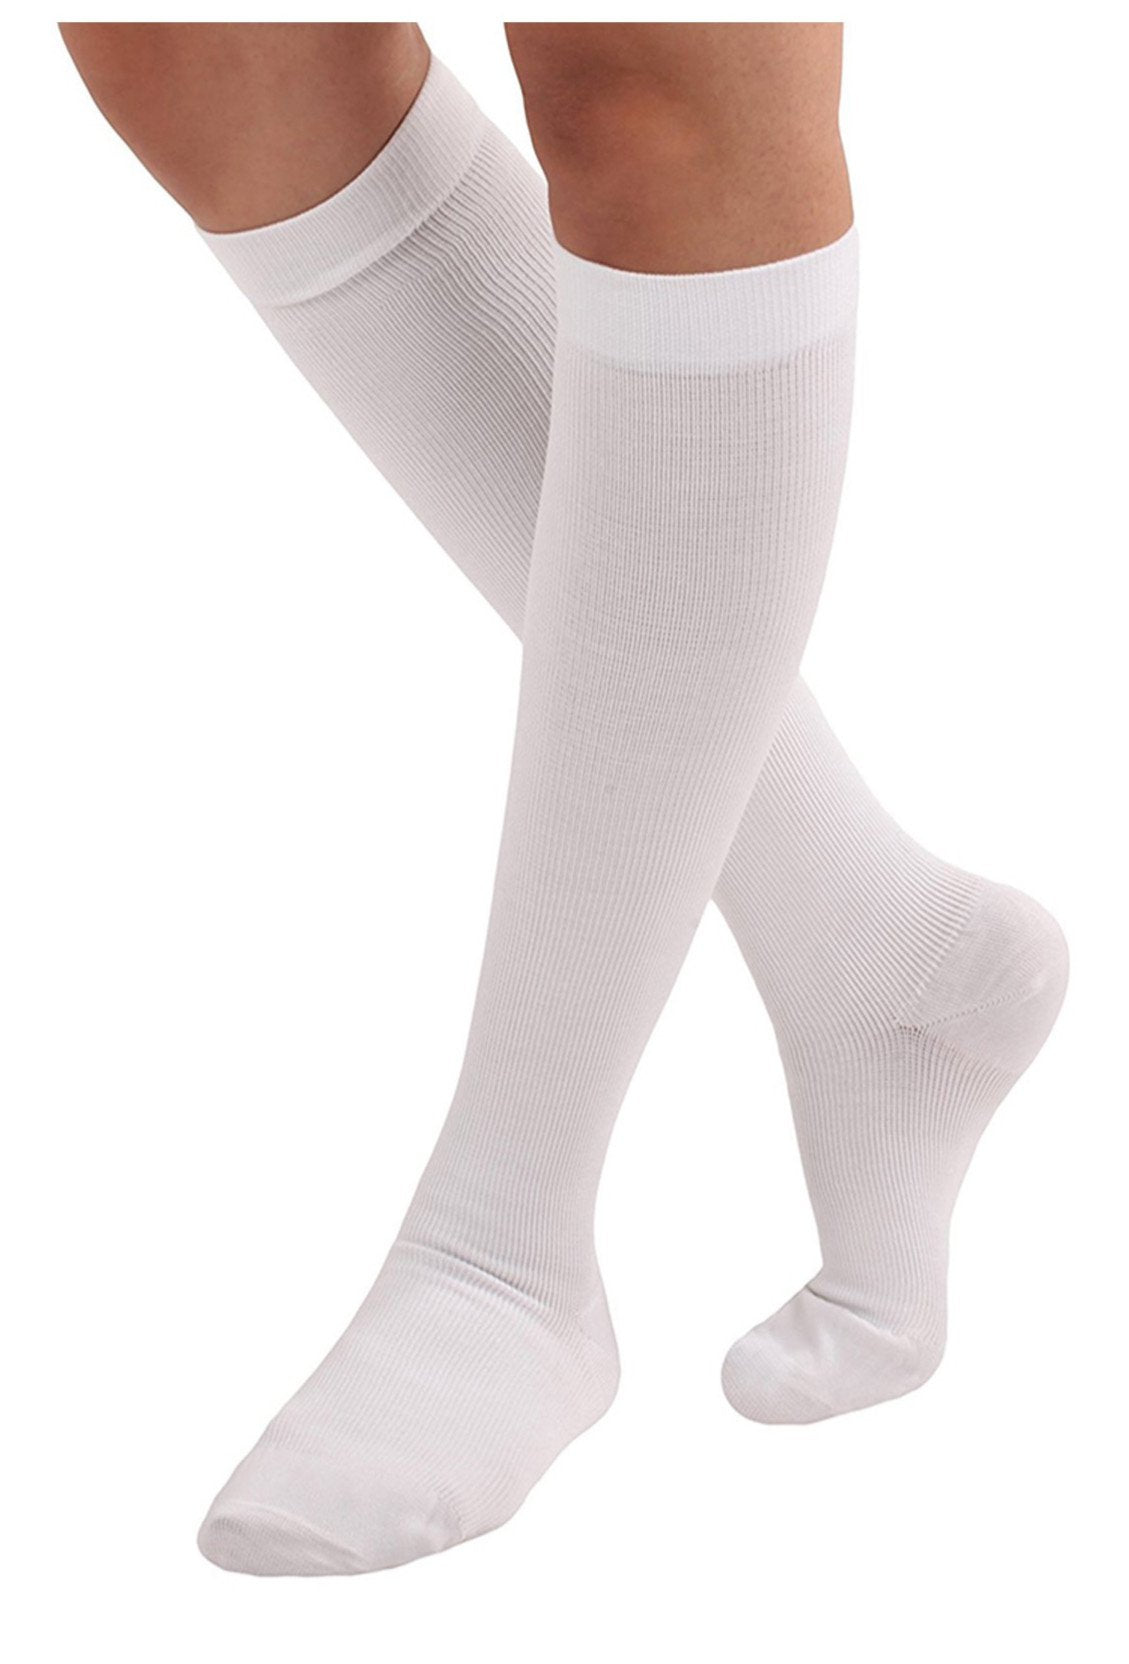 Are Diabetic Socks The Same As Compression Socks? – DIABETIC SOCK CLUB